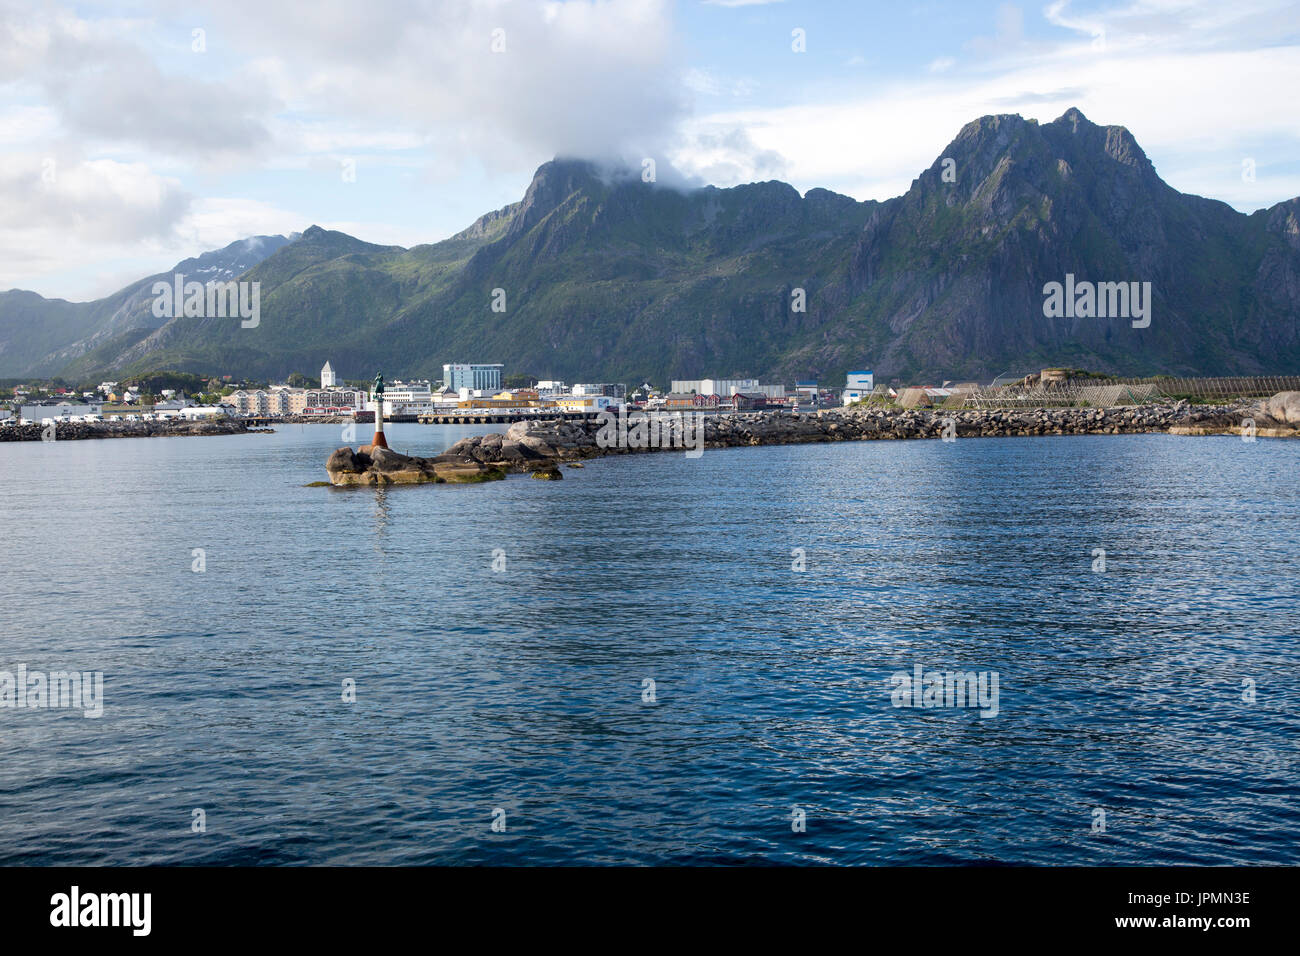 Fisherman's moglie statua all ingresso del porto, Svolvaer, Isole Lofoten, Nordland, Norvegia Foto Stock